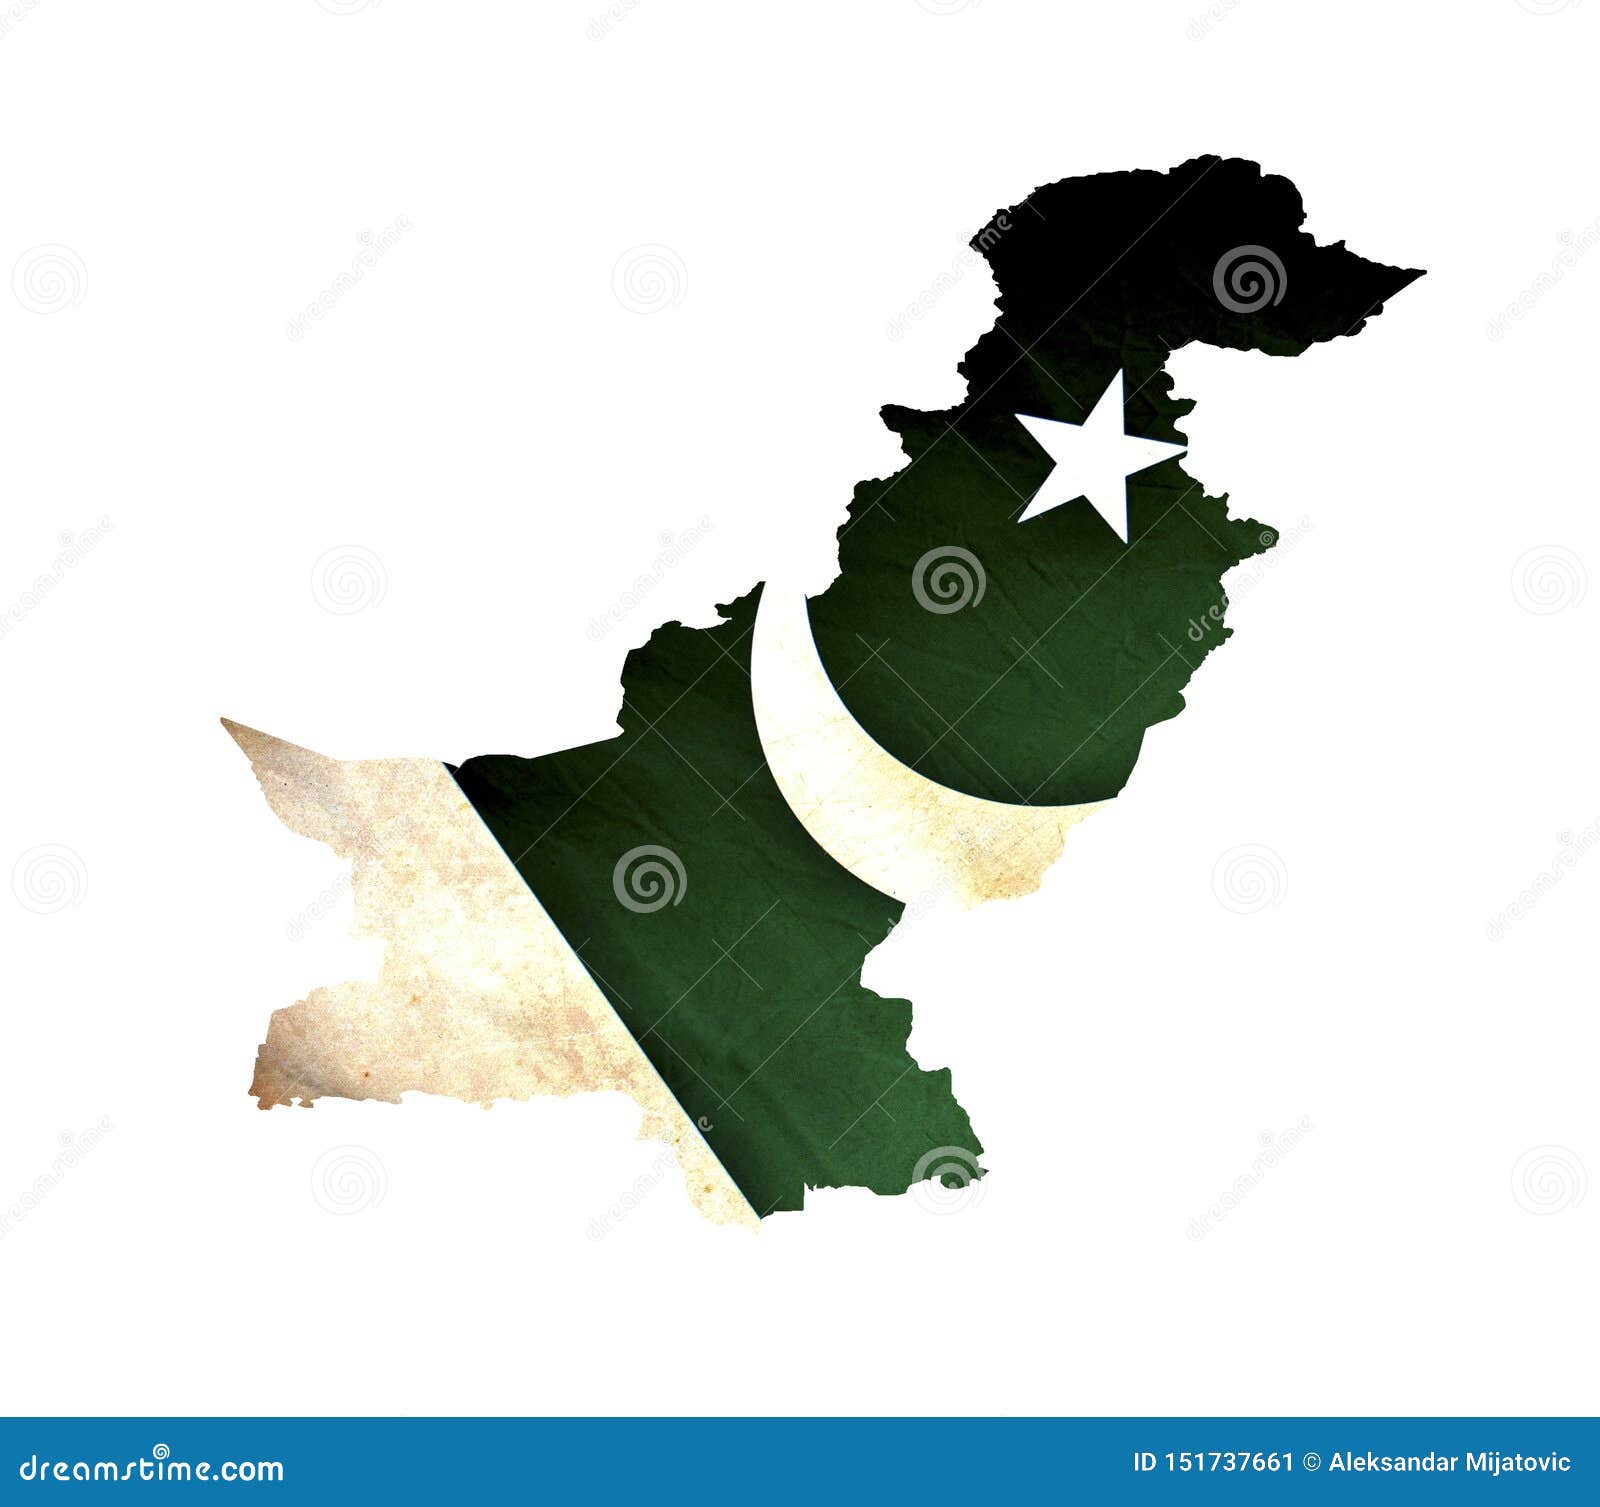 map of pakistan 